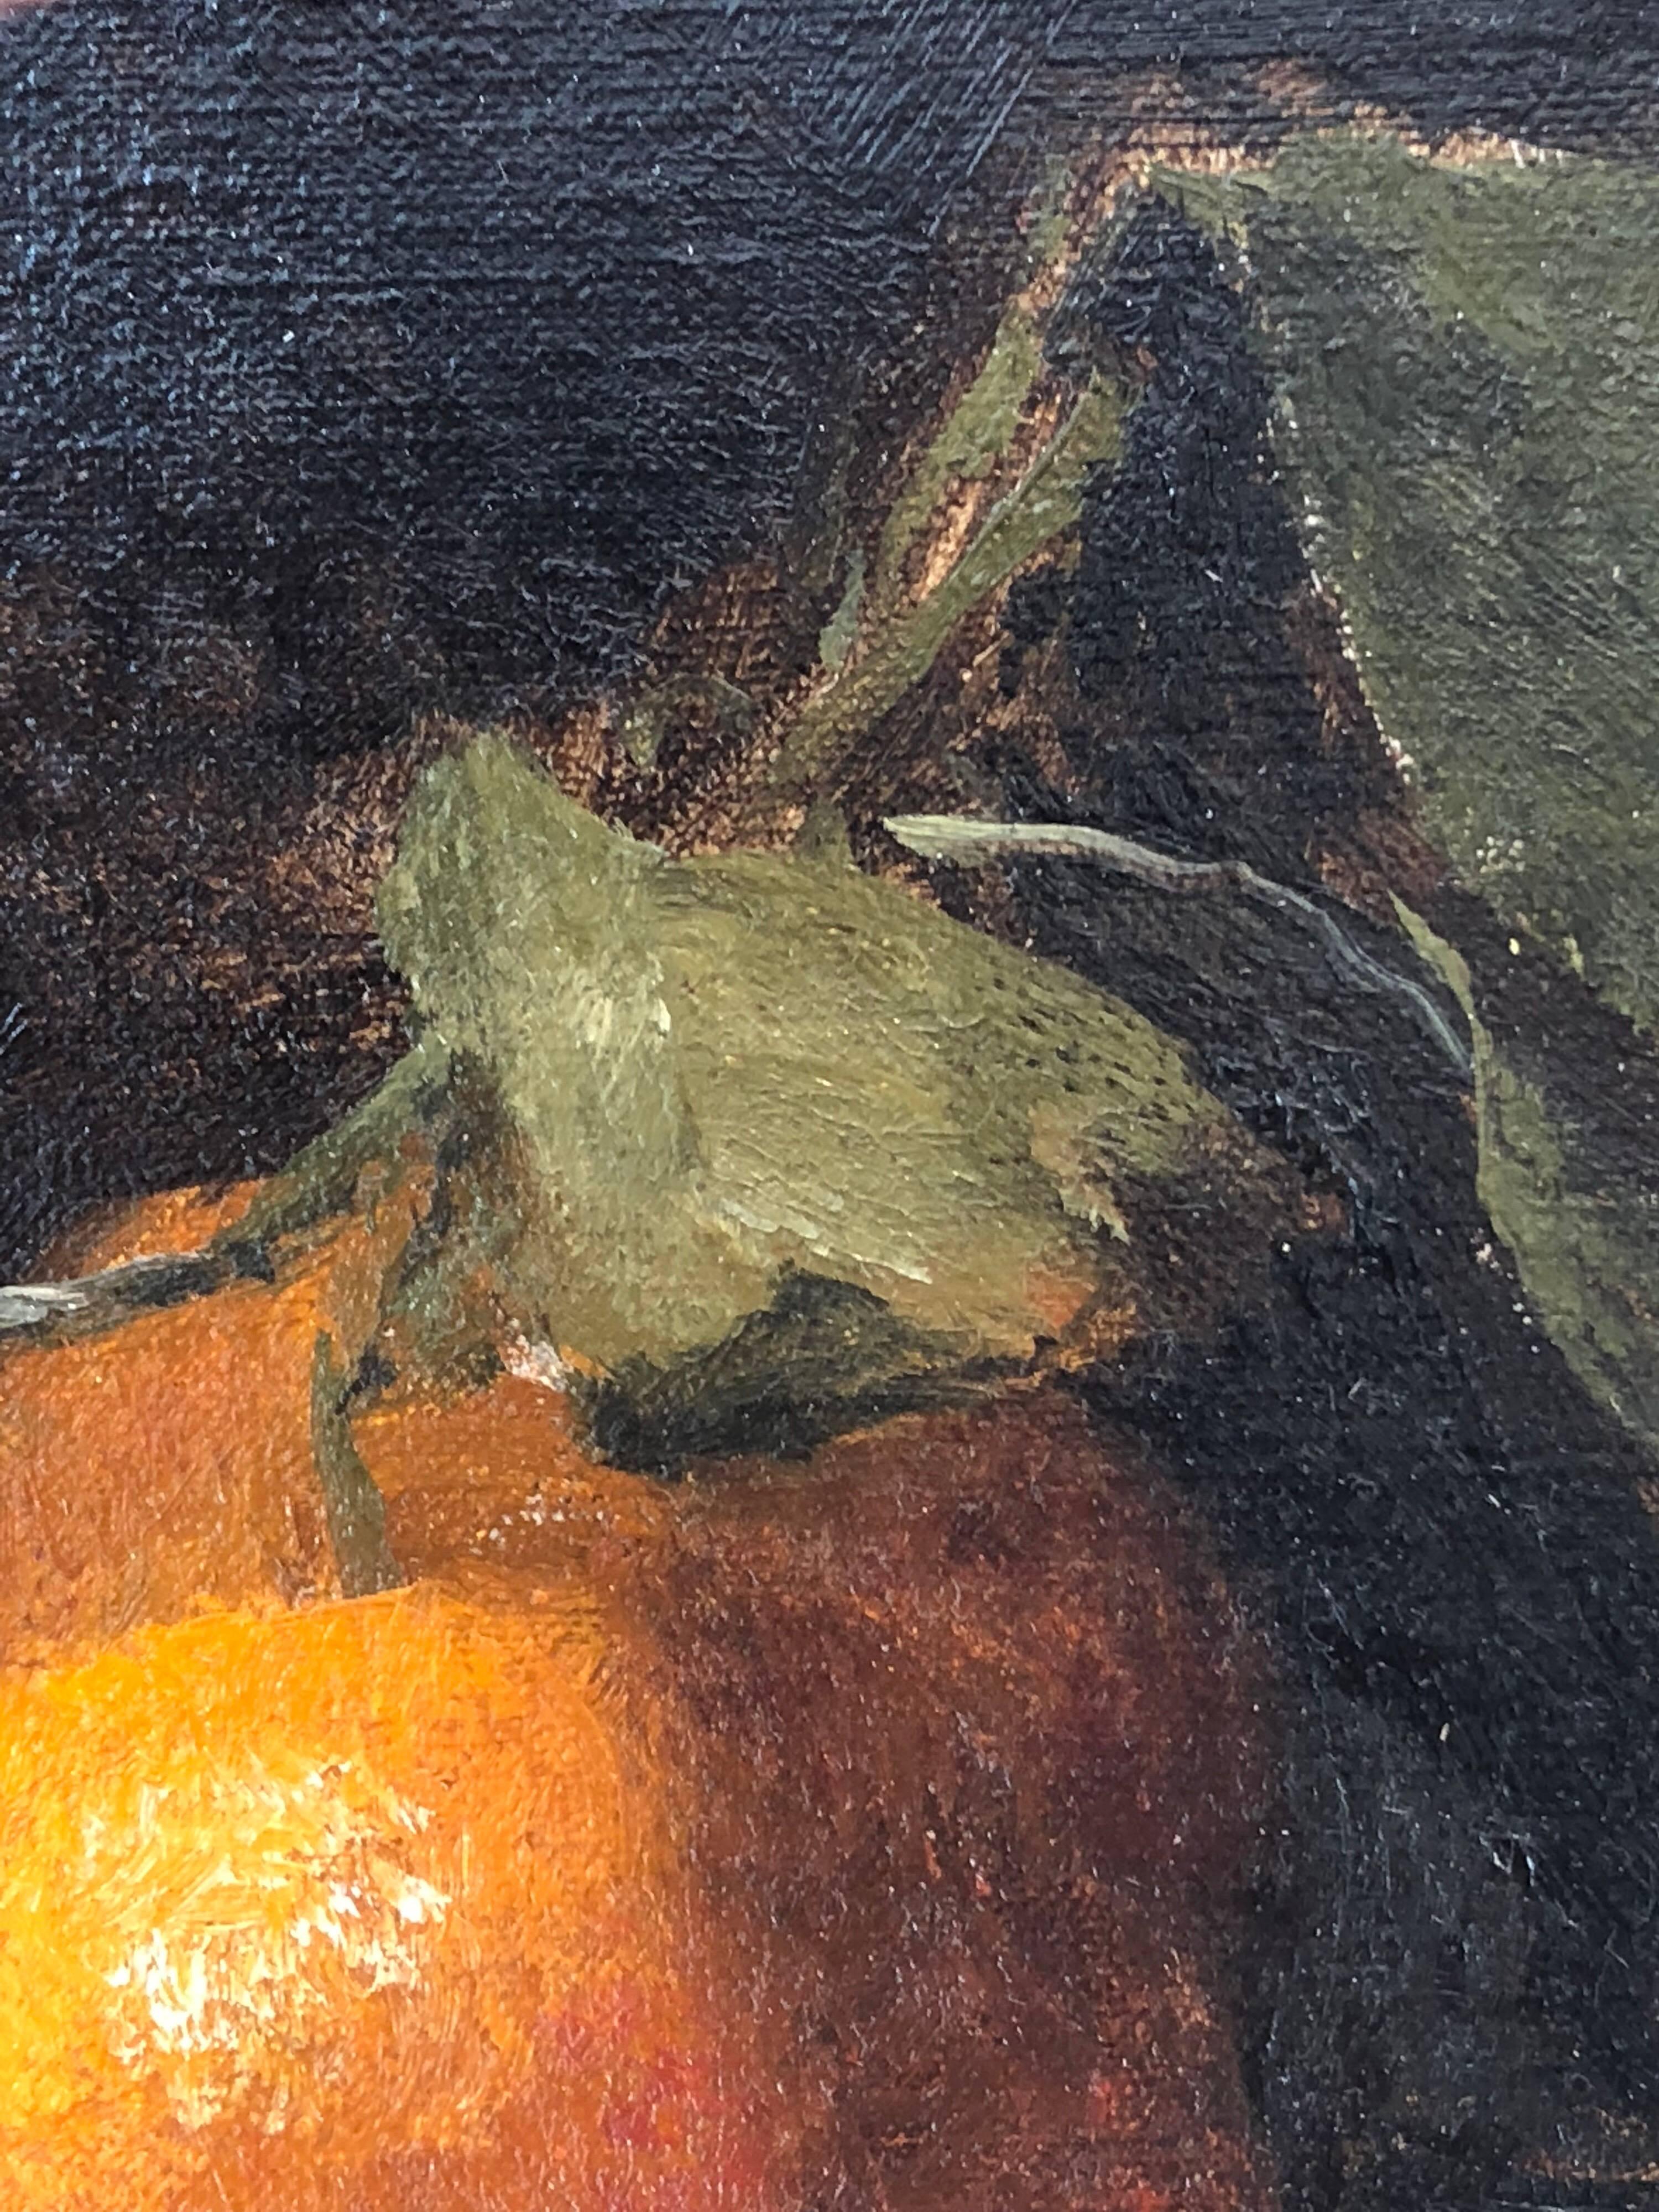 Satsuma Mandarins - Painting by Dale Zinkowski